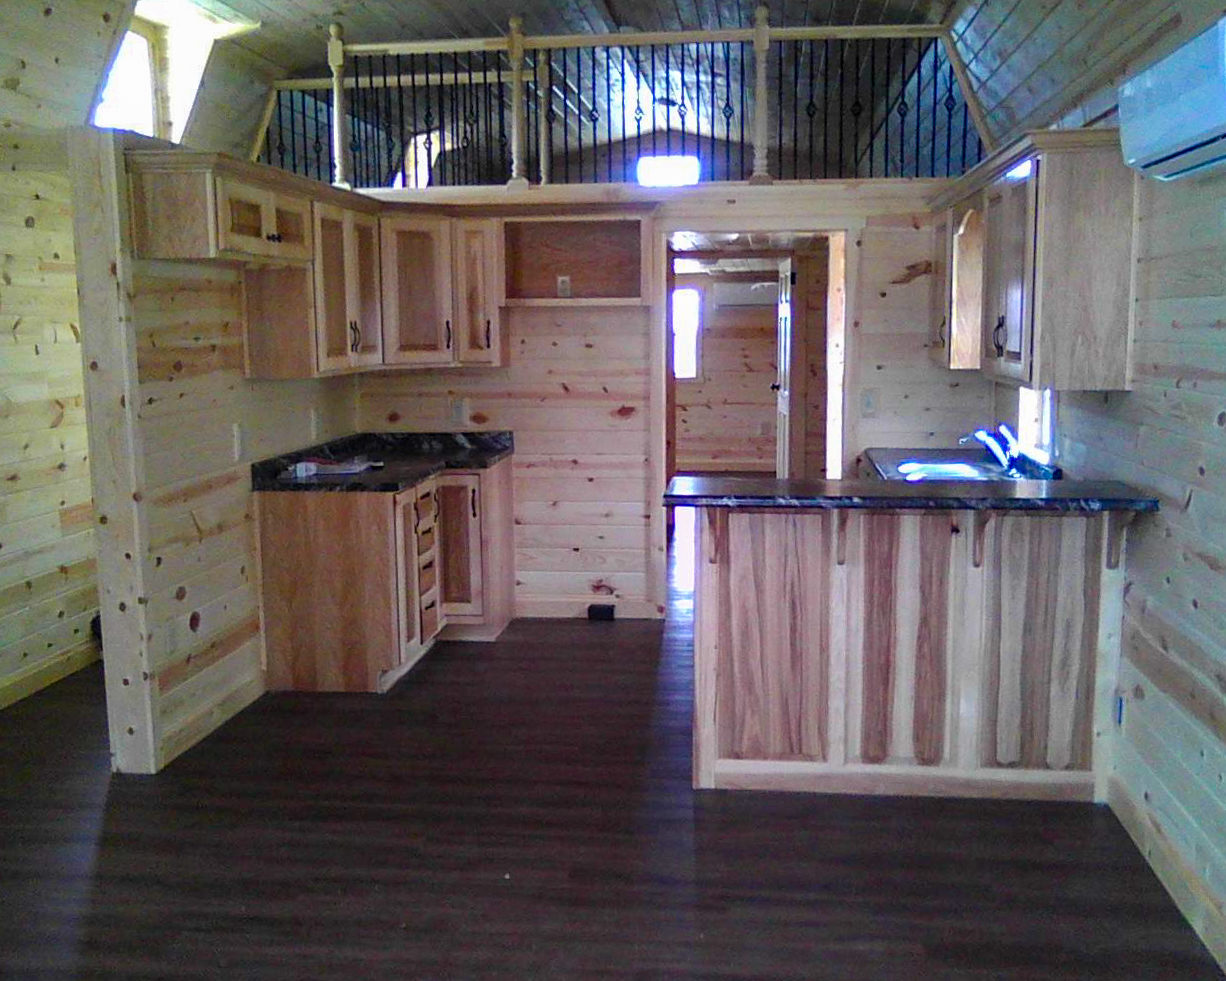 Lofted Barn Cabin Interior Ideas | Minimalist Home Design Ideas